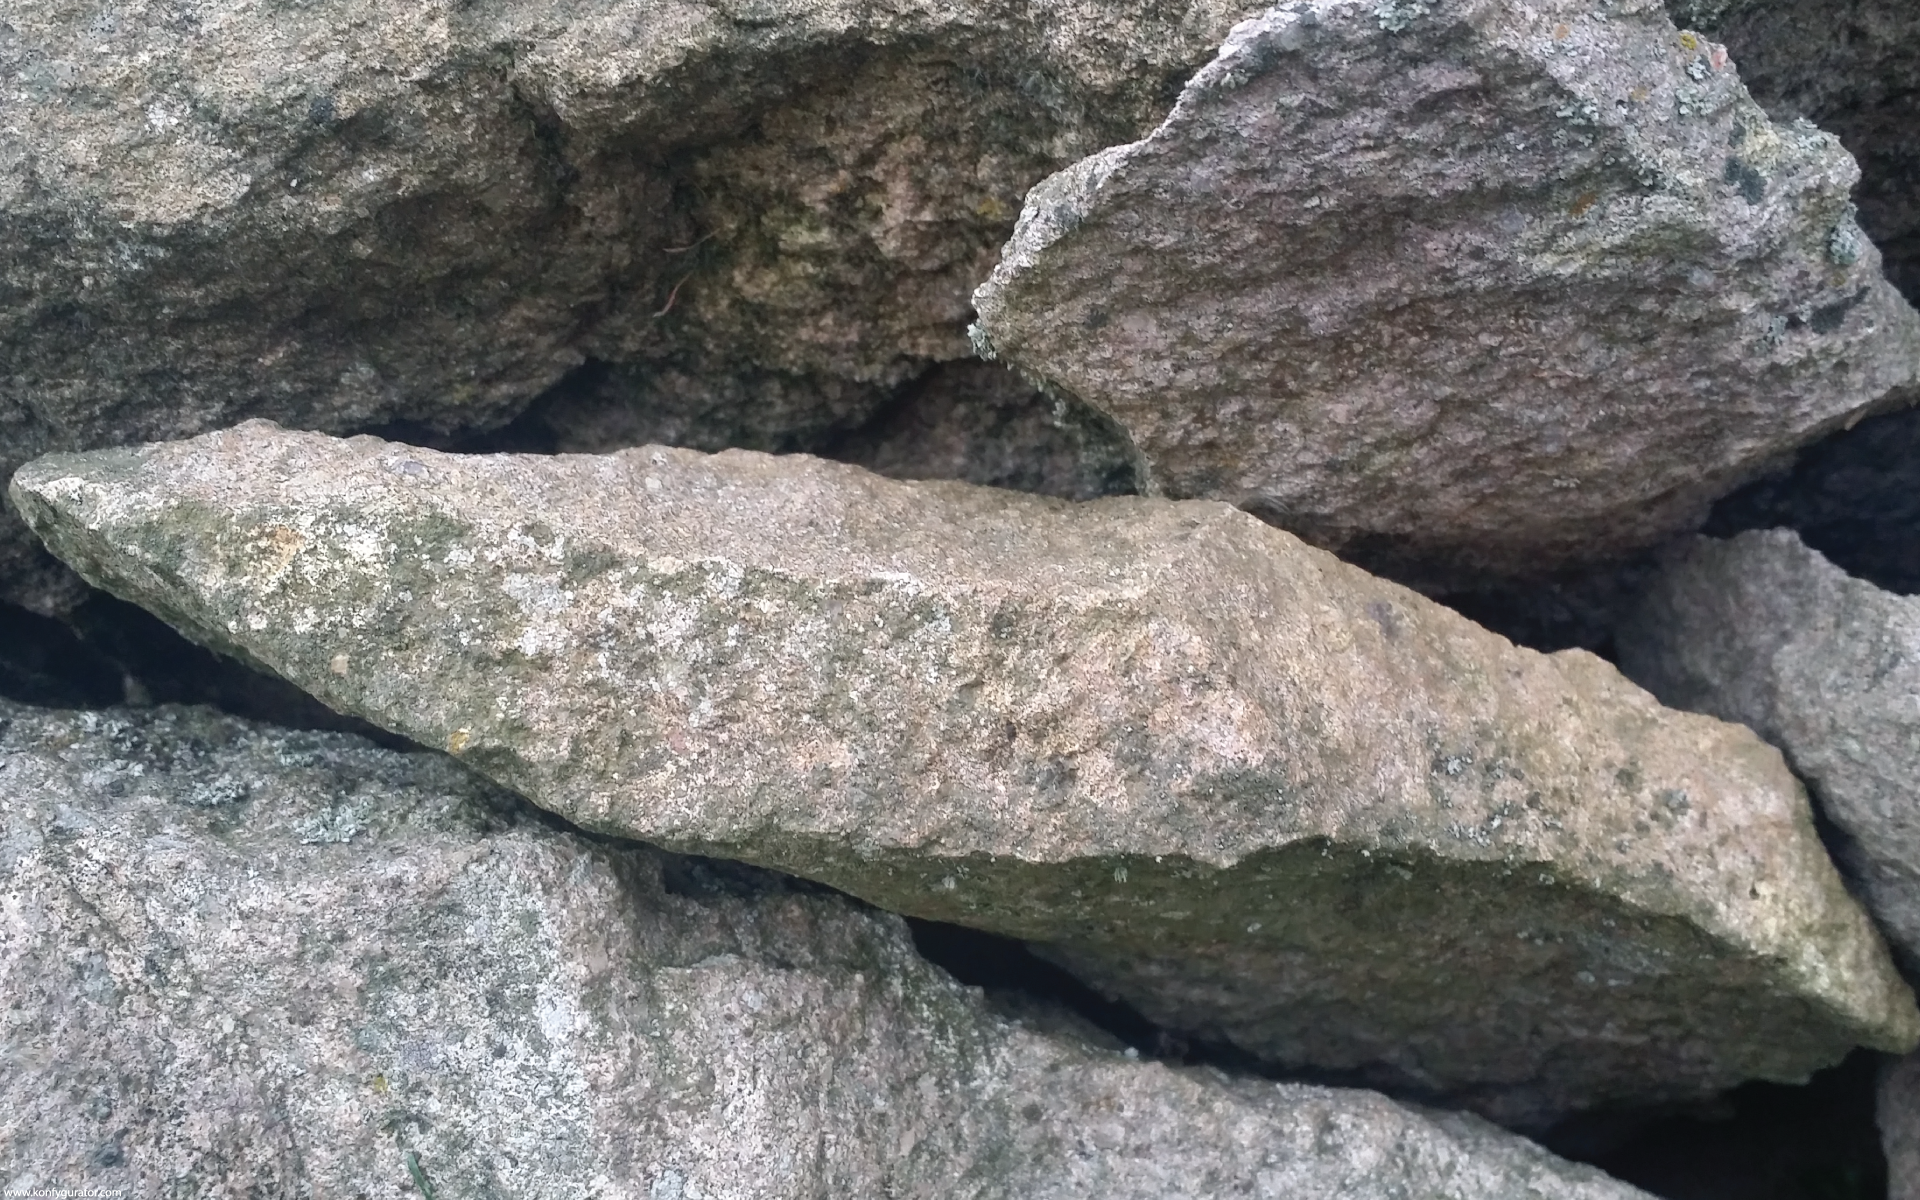 HD Wallpapers - Textures - rocks, stones, holes